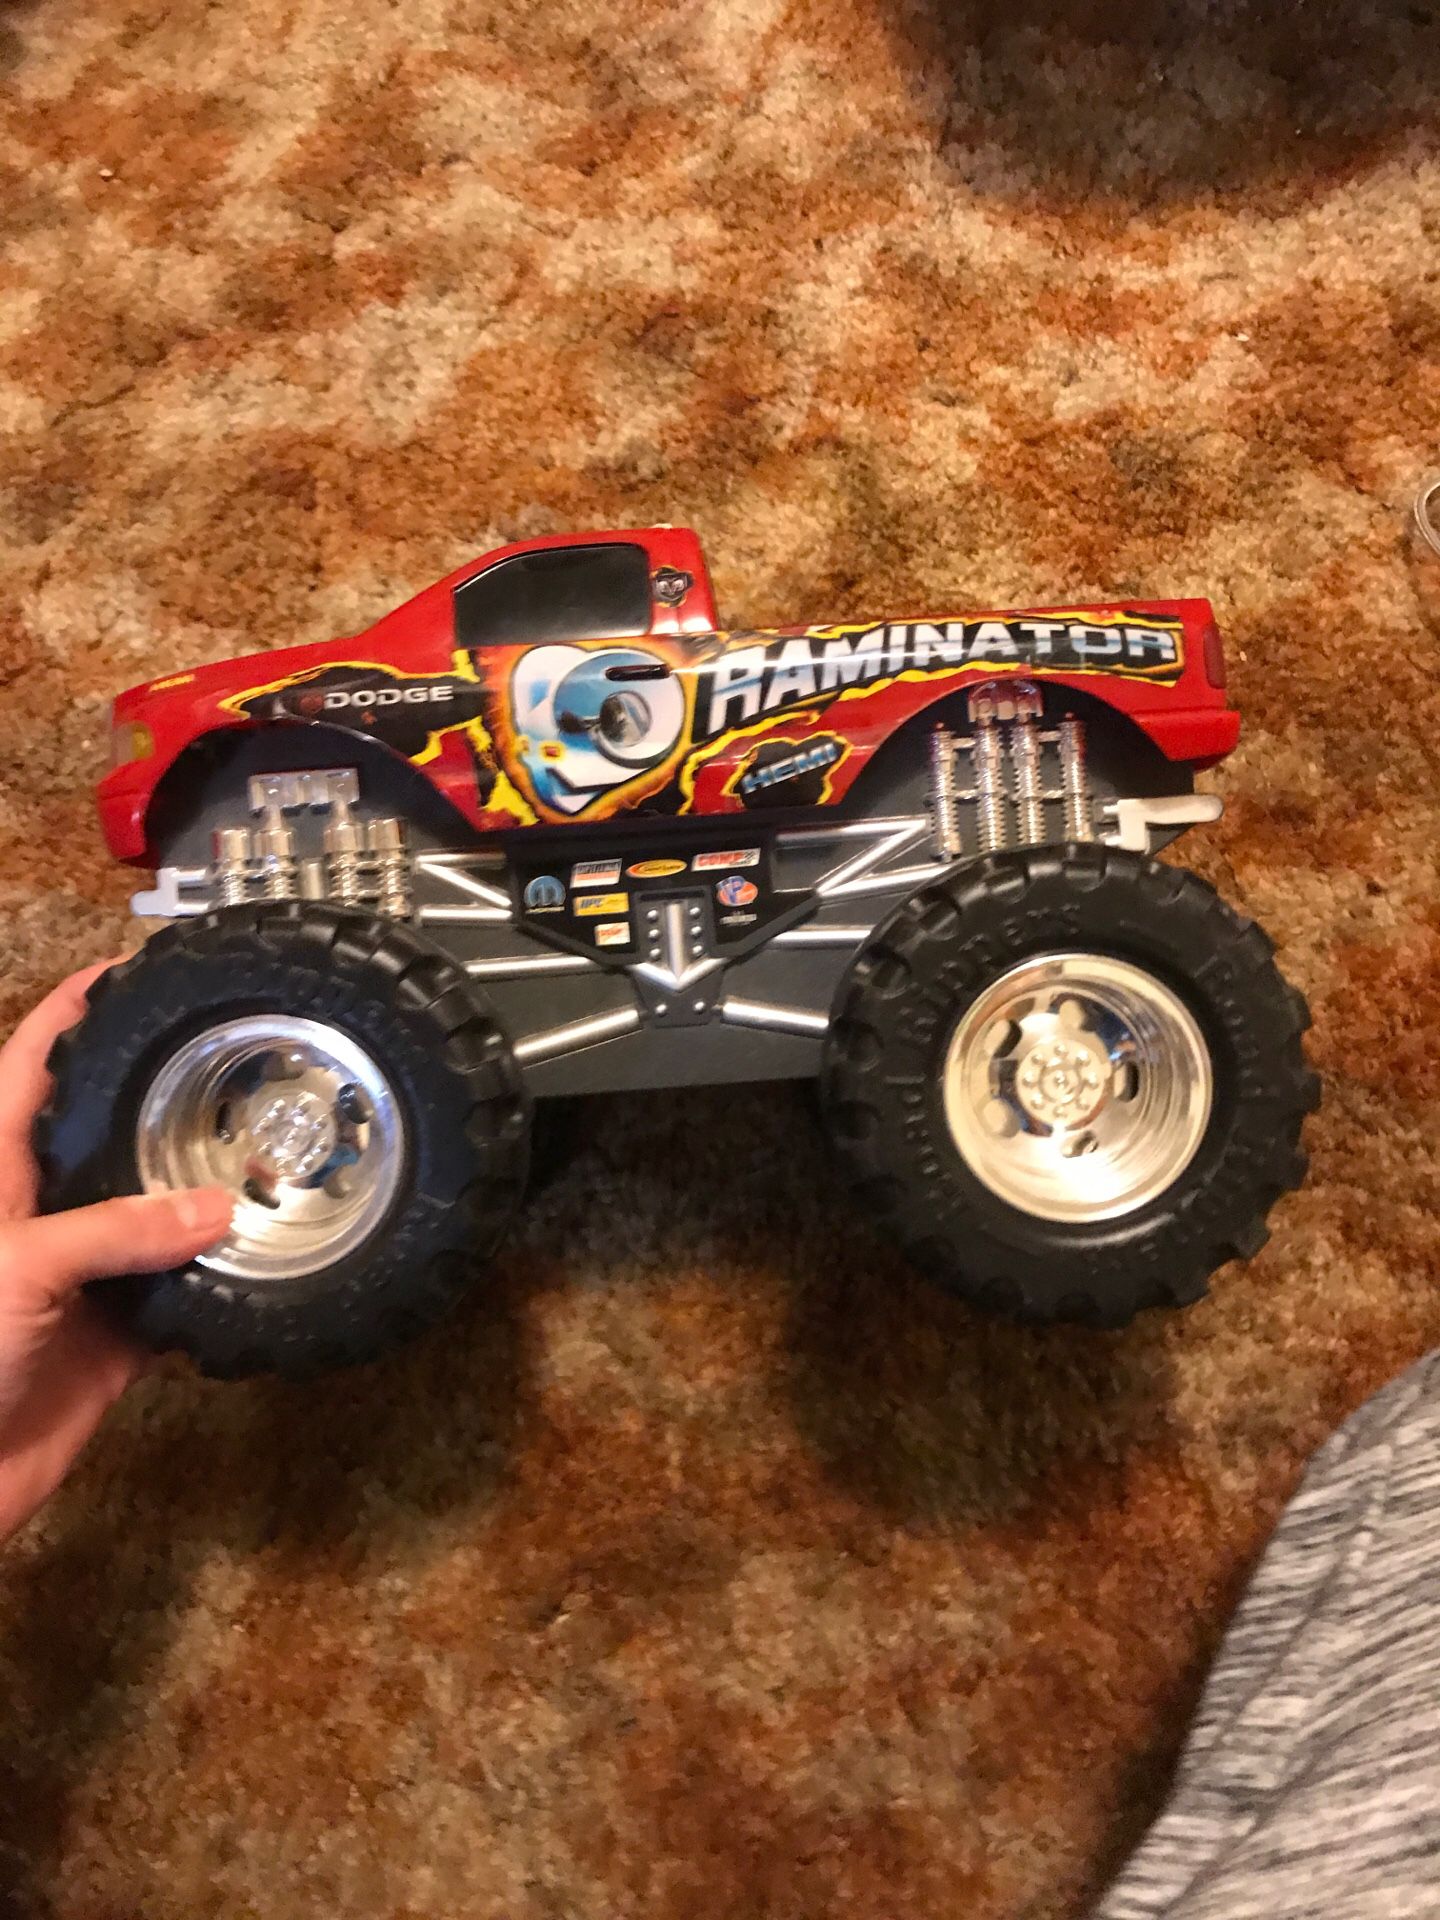 Toy truck